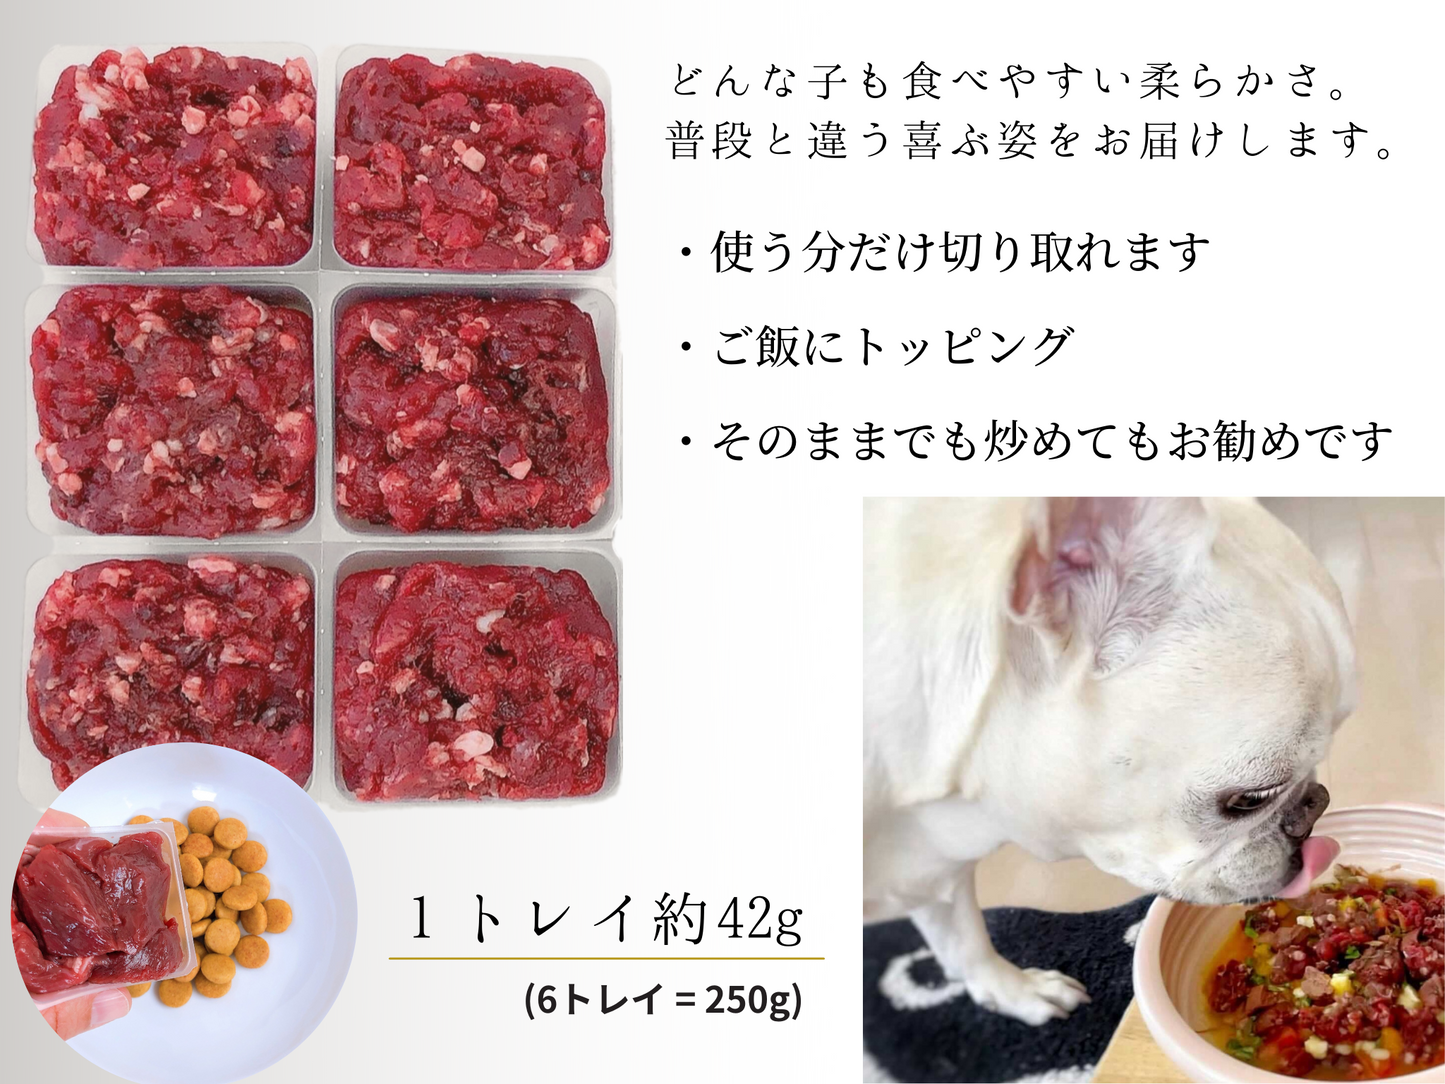 Zasshu® [Minced Tray] Venison Ezo Deer Meat Ezo Venison Ezo Shika Meat [Hokkaido Highest Quality] Dog Cat Pet Food Venison Minced